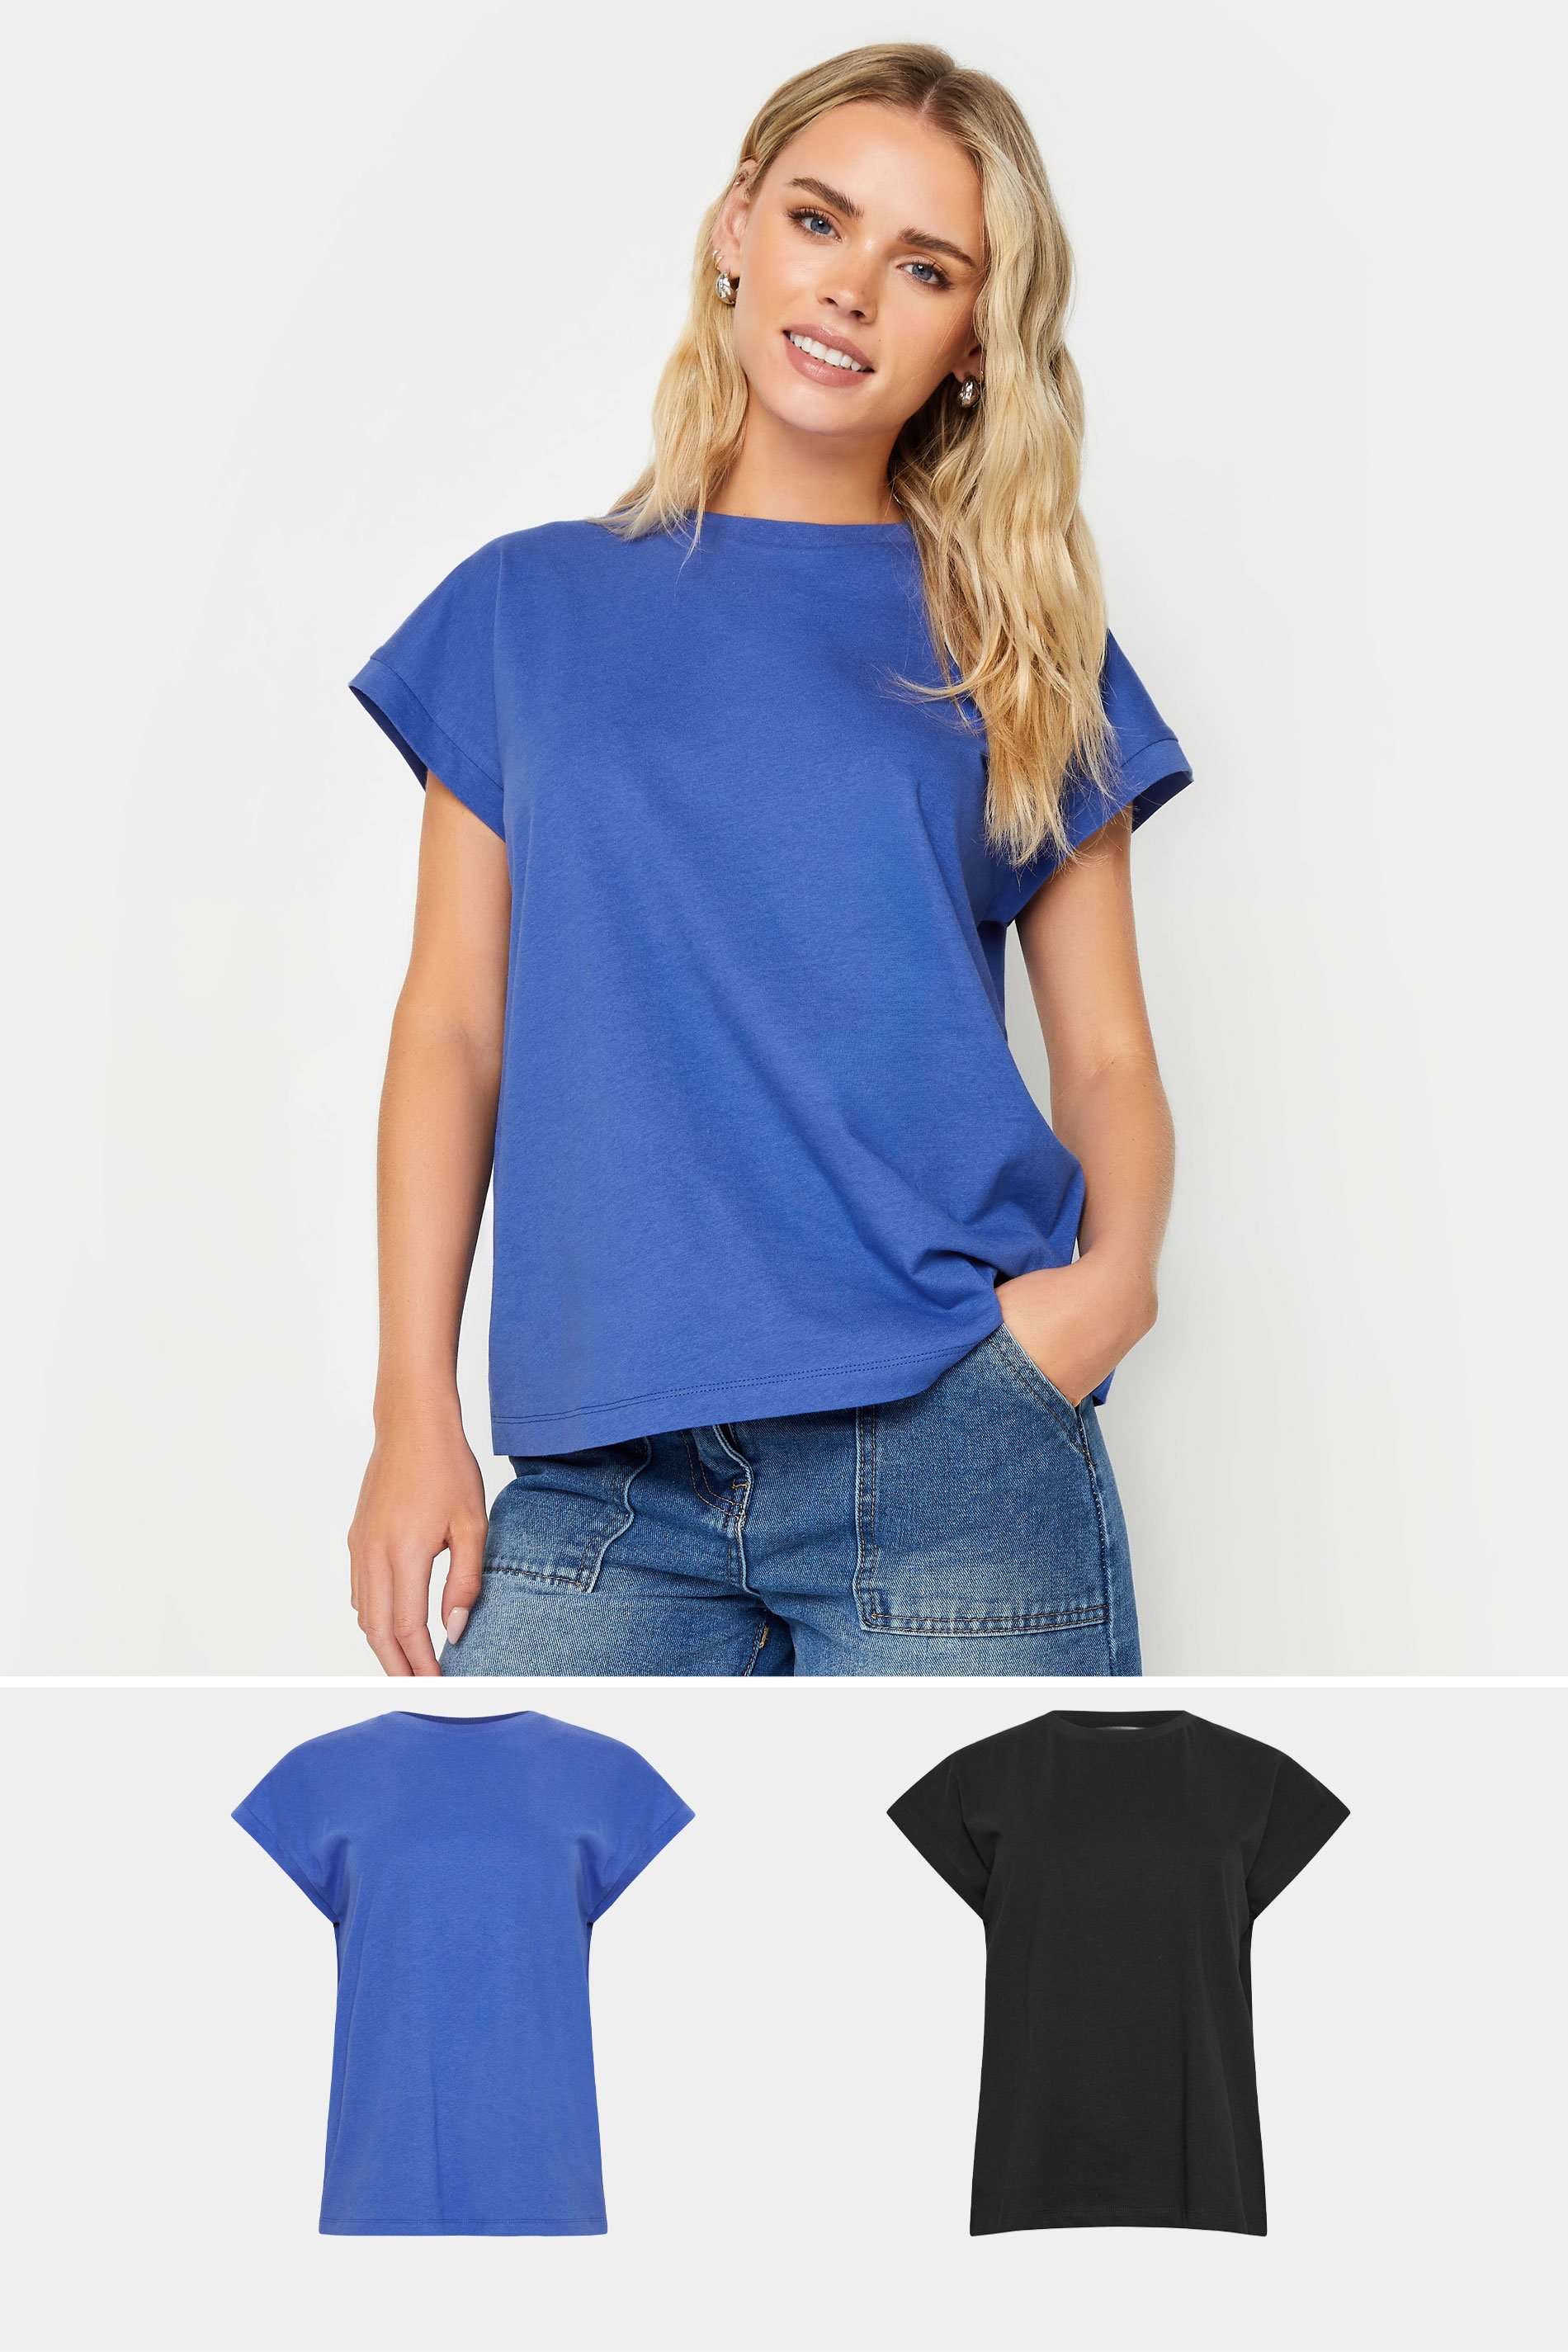 PixieGirl 2 PACK Petite Women's Blue & Black Short Sleeve T-Shirts | PixieGirl 1